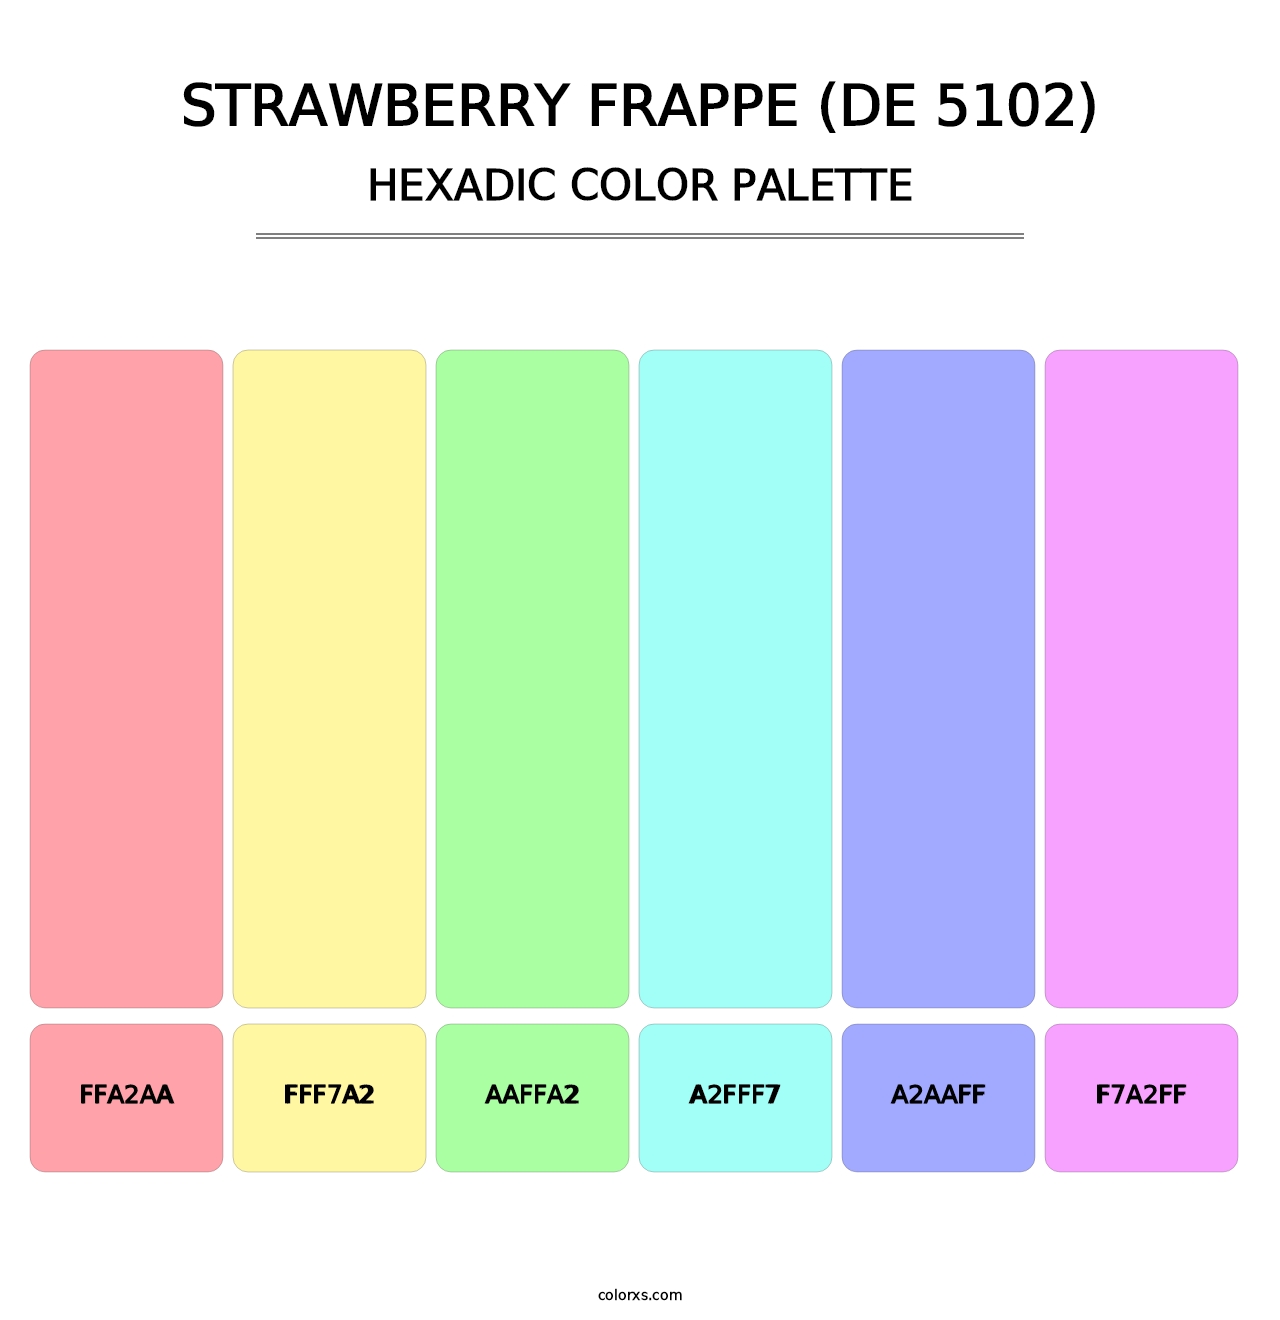 Strawberry Frappe (DE 5102) - Hexadic Color Palette